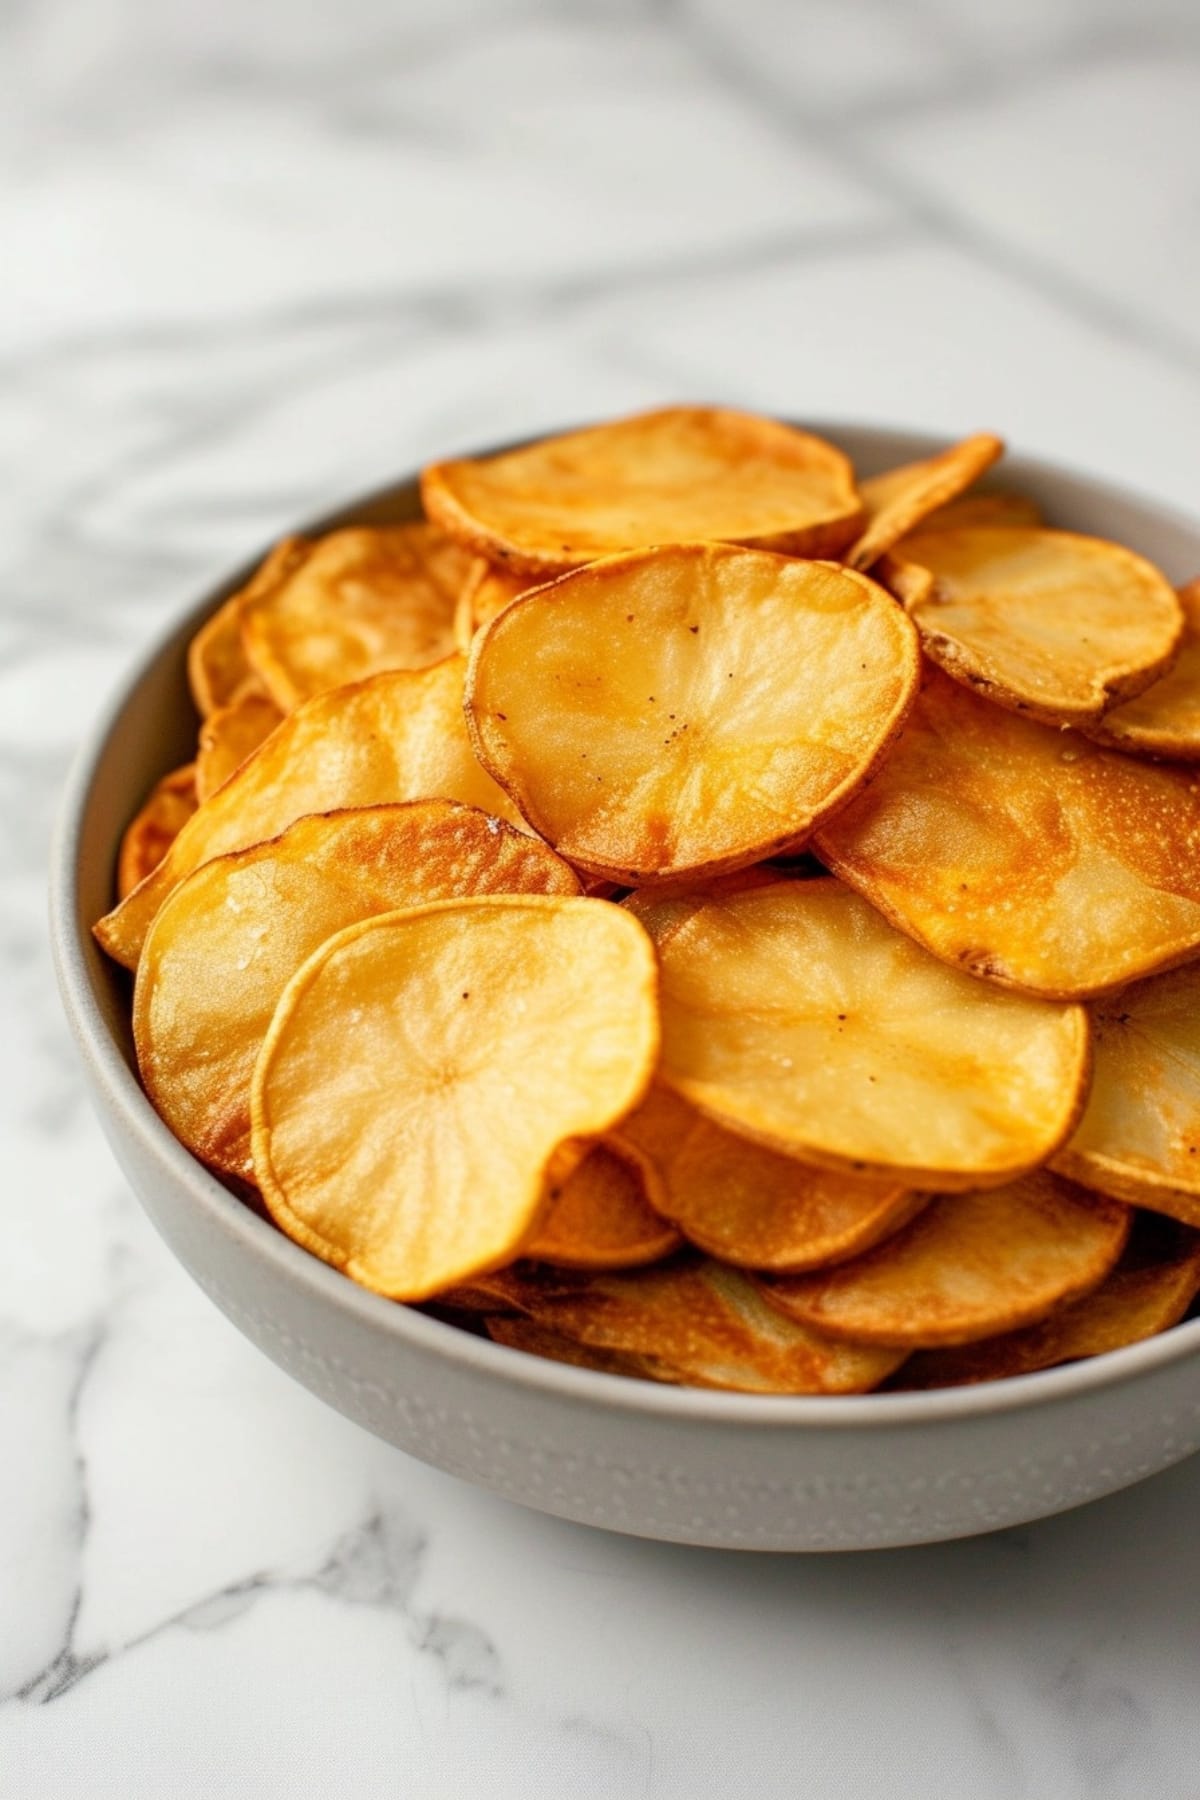 Potato chips in a white bowl.